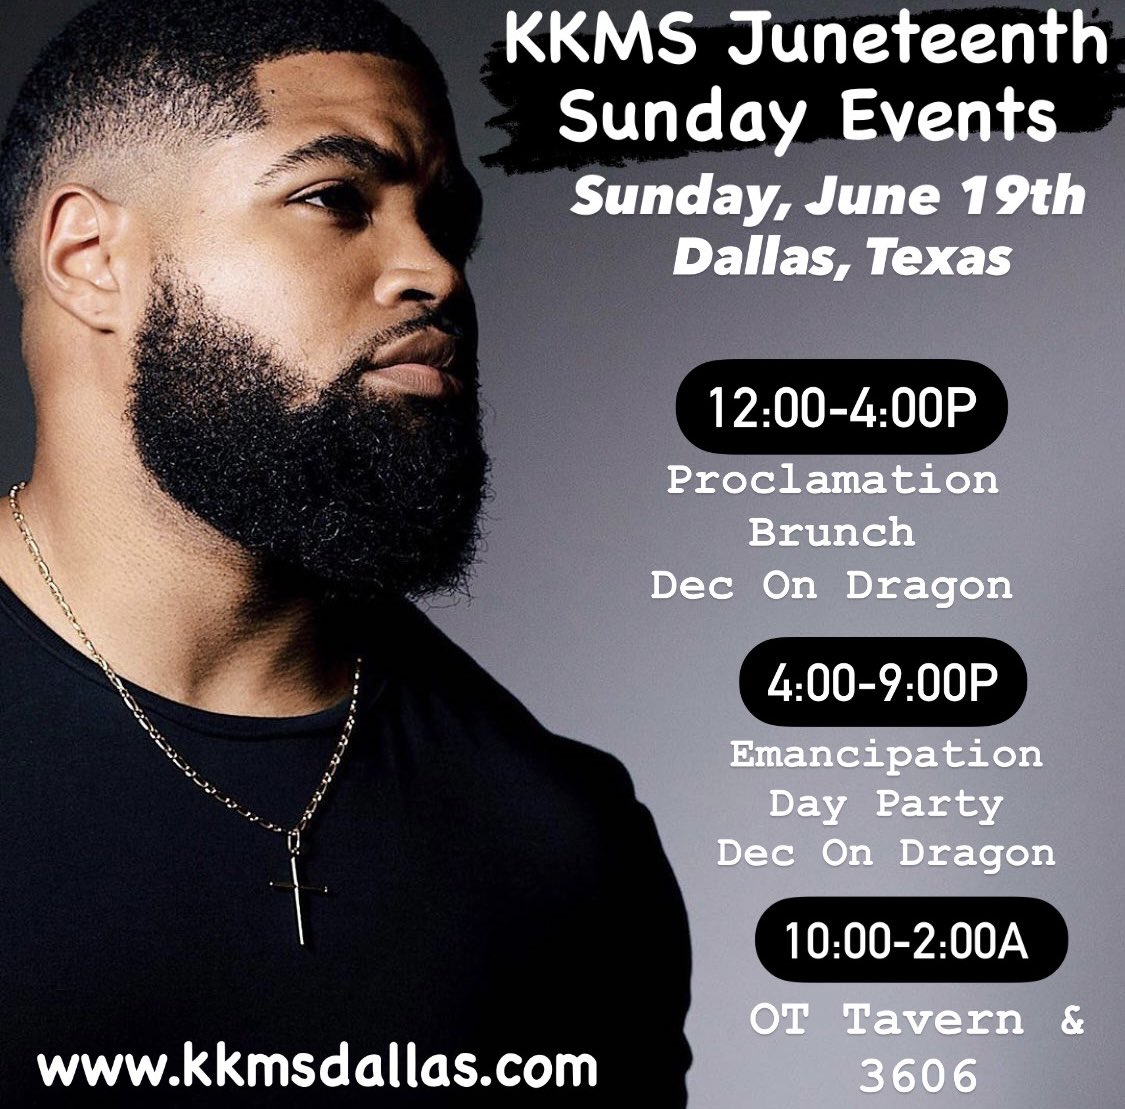 Juneteenth SunDay FunDay In Dallas, Texas w/ @kkms2k 

#KKMS #TheDistinguishedGents #juneteenth2022 #AllWhiteAffair #proclamation #brunchdallas #sundayfunday #finale 
#DALLASJUNETEENTH #Bet